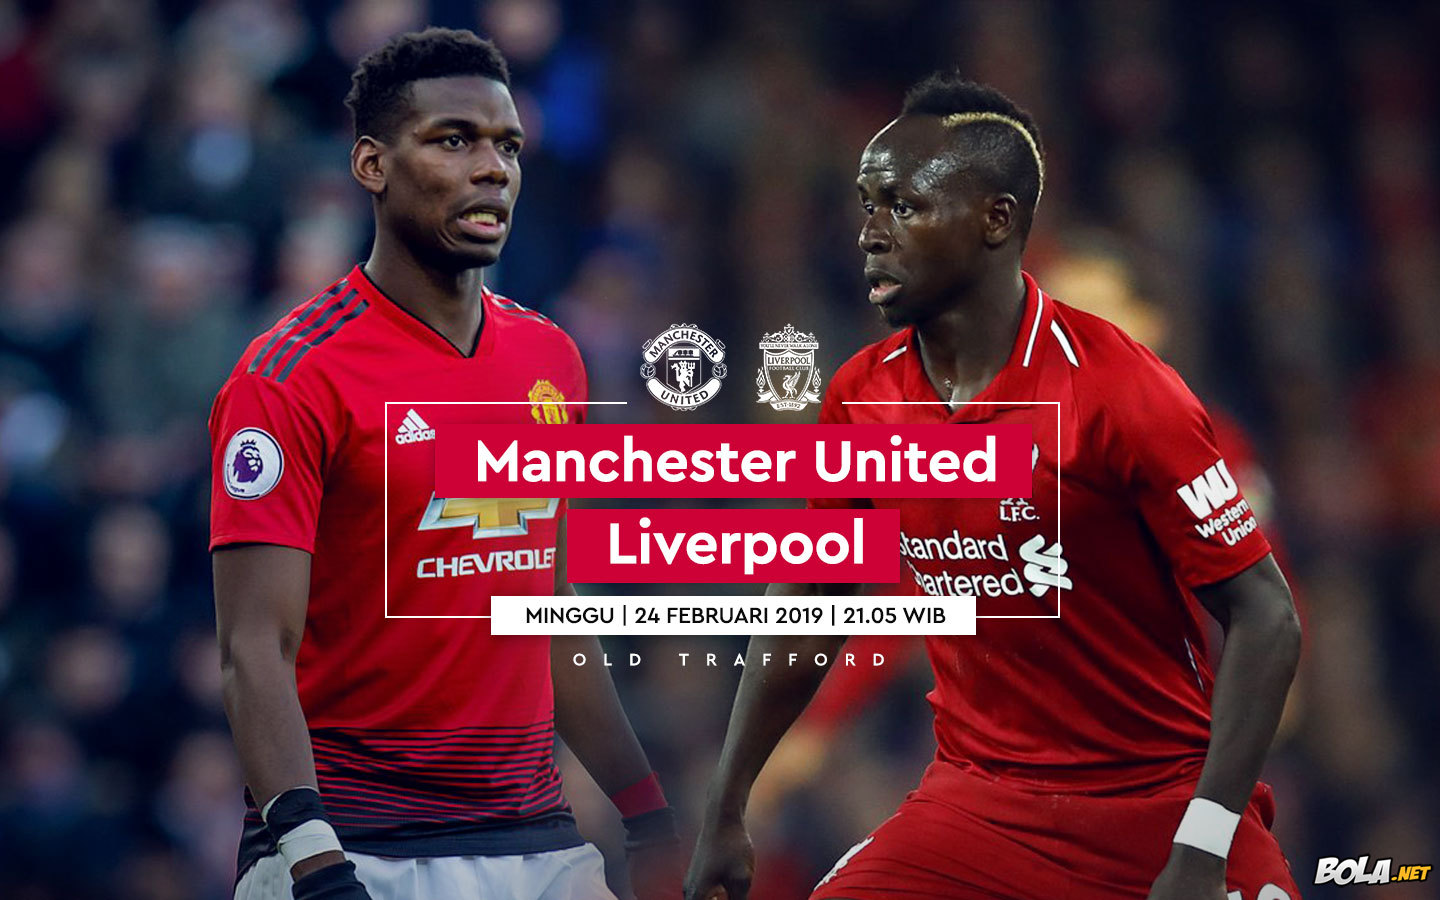 Deskripsi : Wallpaper Manchester United Vs Liverpool, size: 1440x900